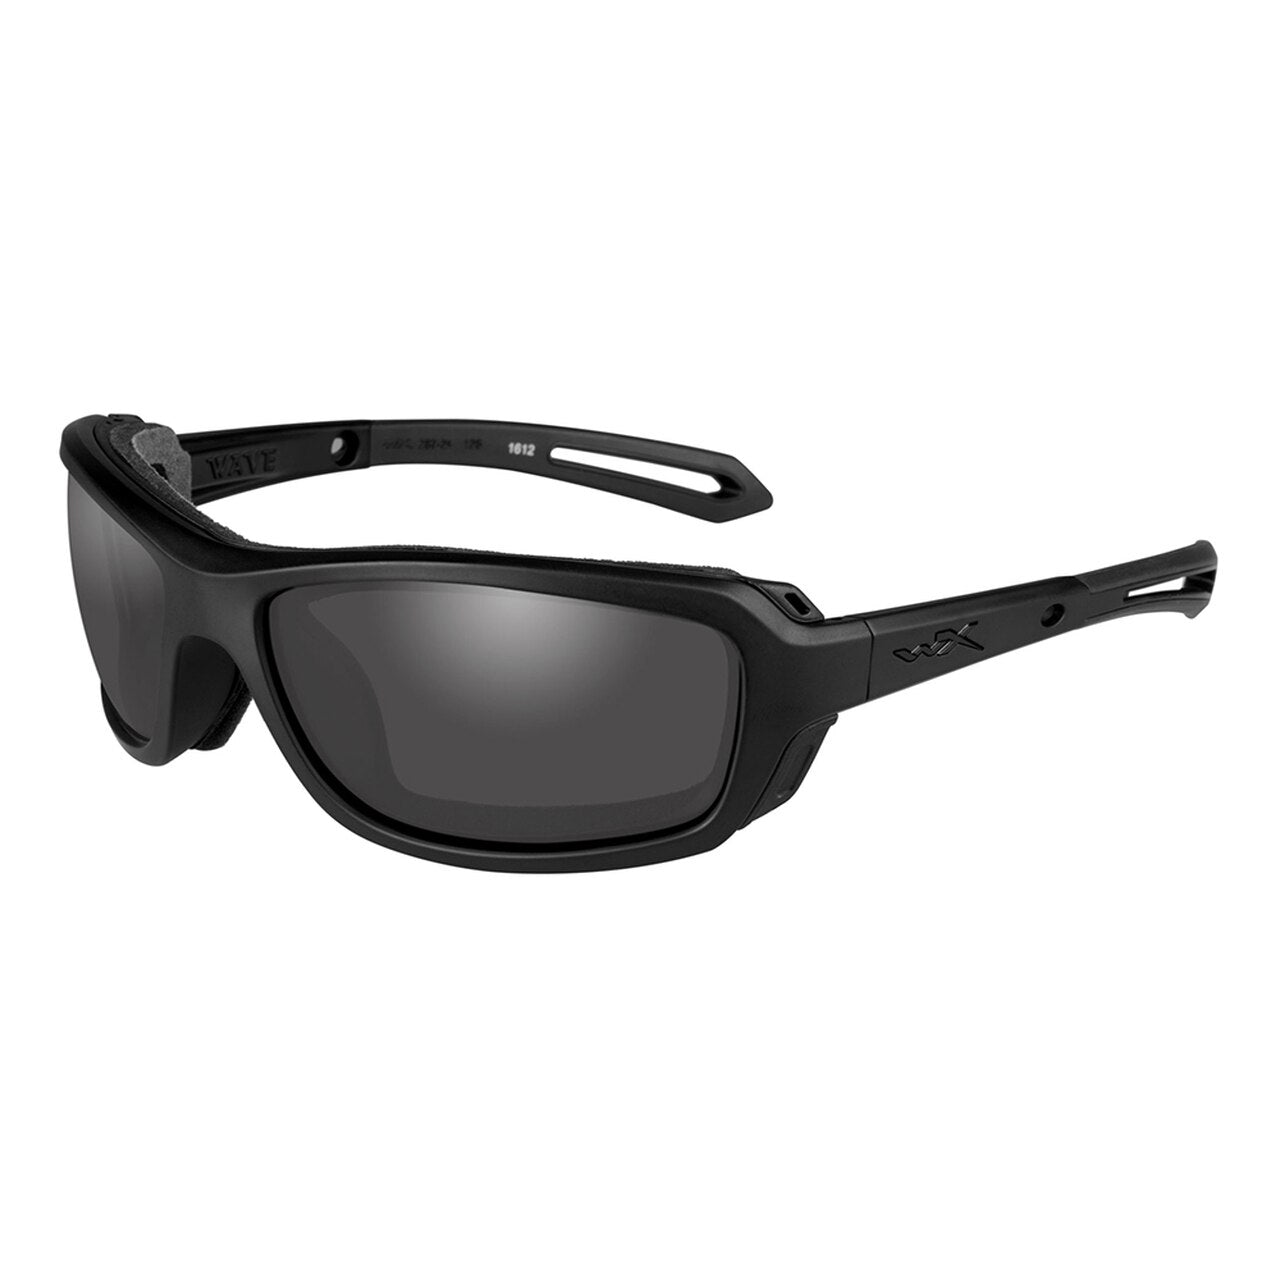 Wiley X Wave Sunglasses Smoke Grey Matte Black Frame Tactical Distributors Ltd New Zealand